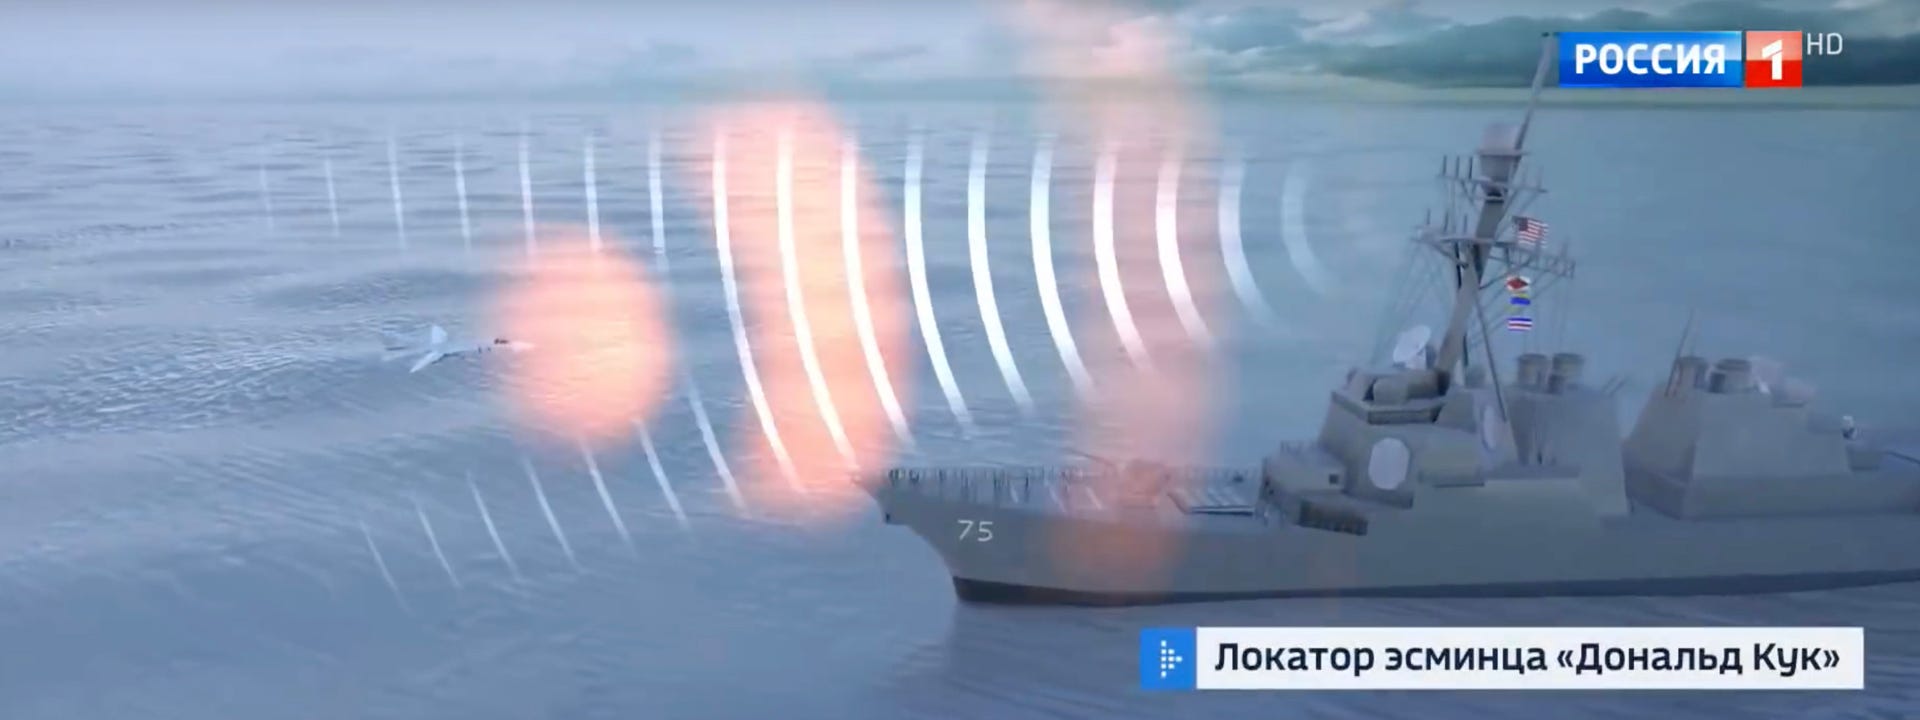 Russia's Fake “Electronic Bomb” - DFRLab - Medium